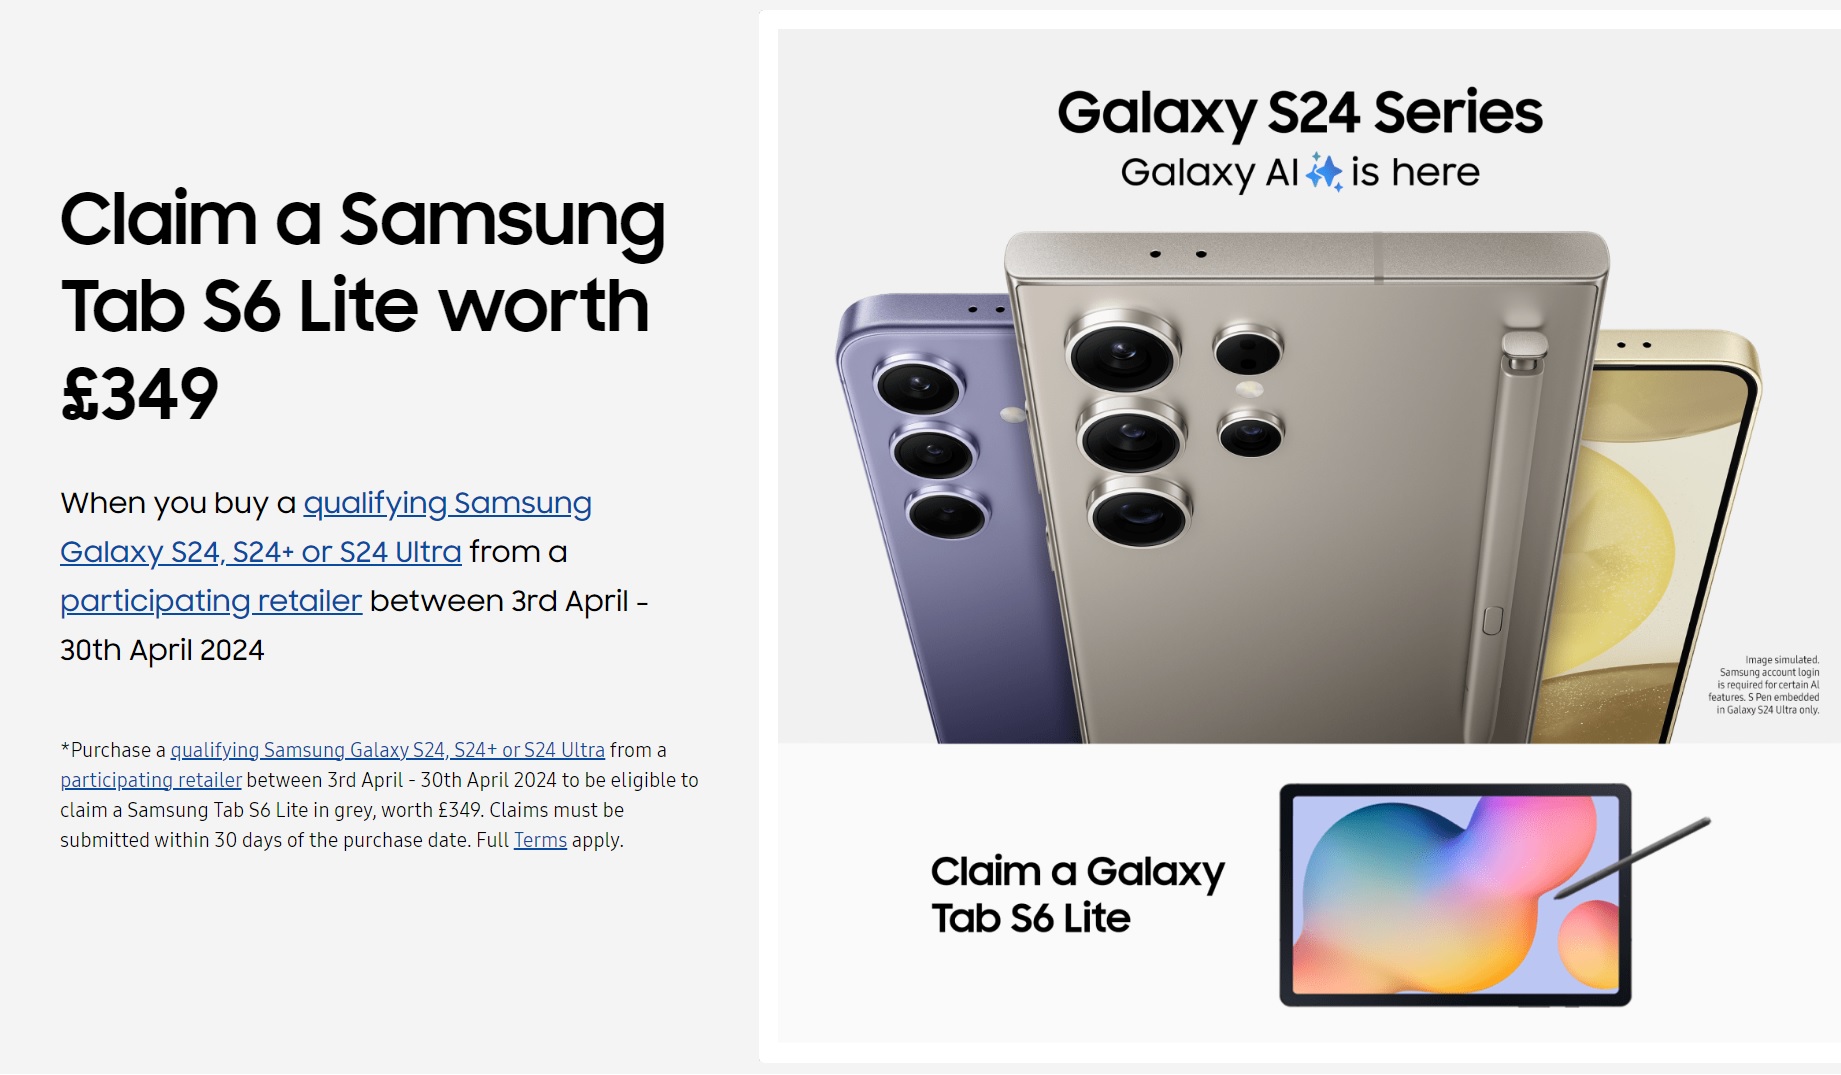 Claim a free Galaxy Tab S6 Lite with Samsung Galaxy S24 Ultra deals